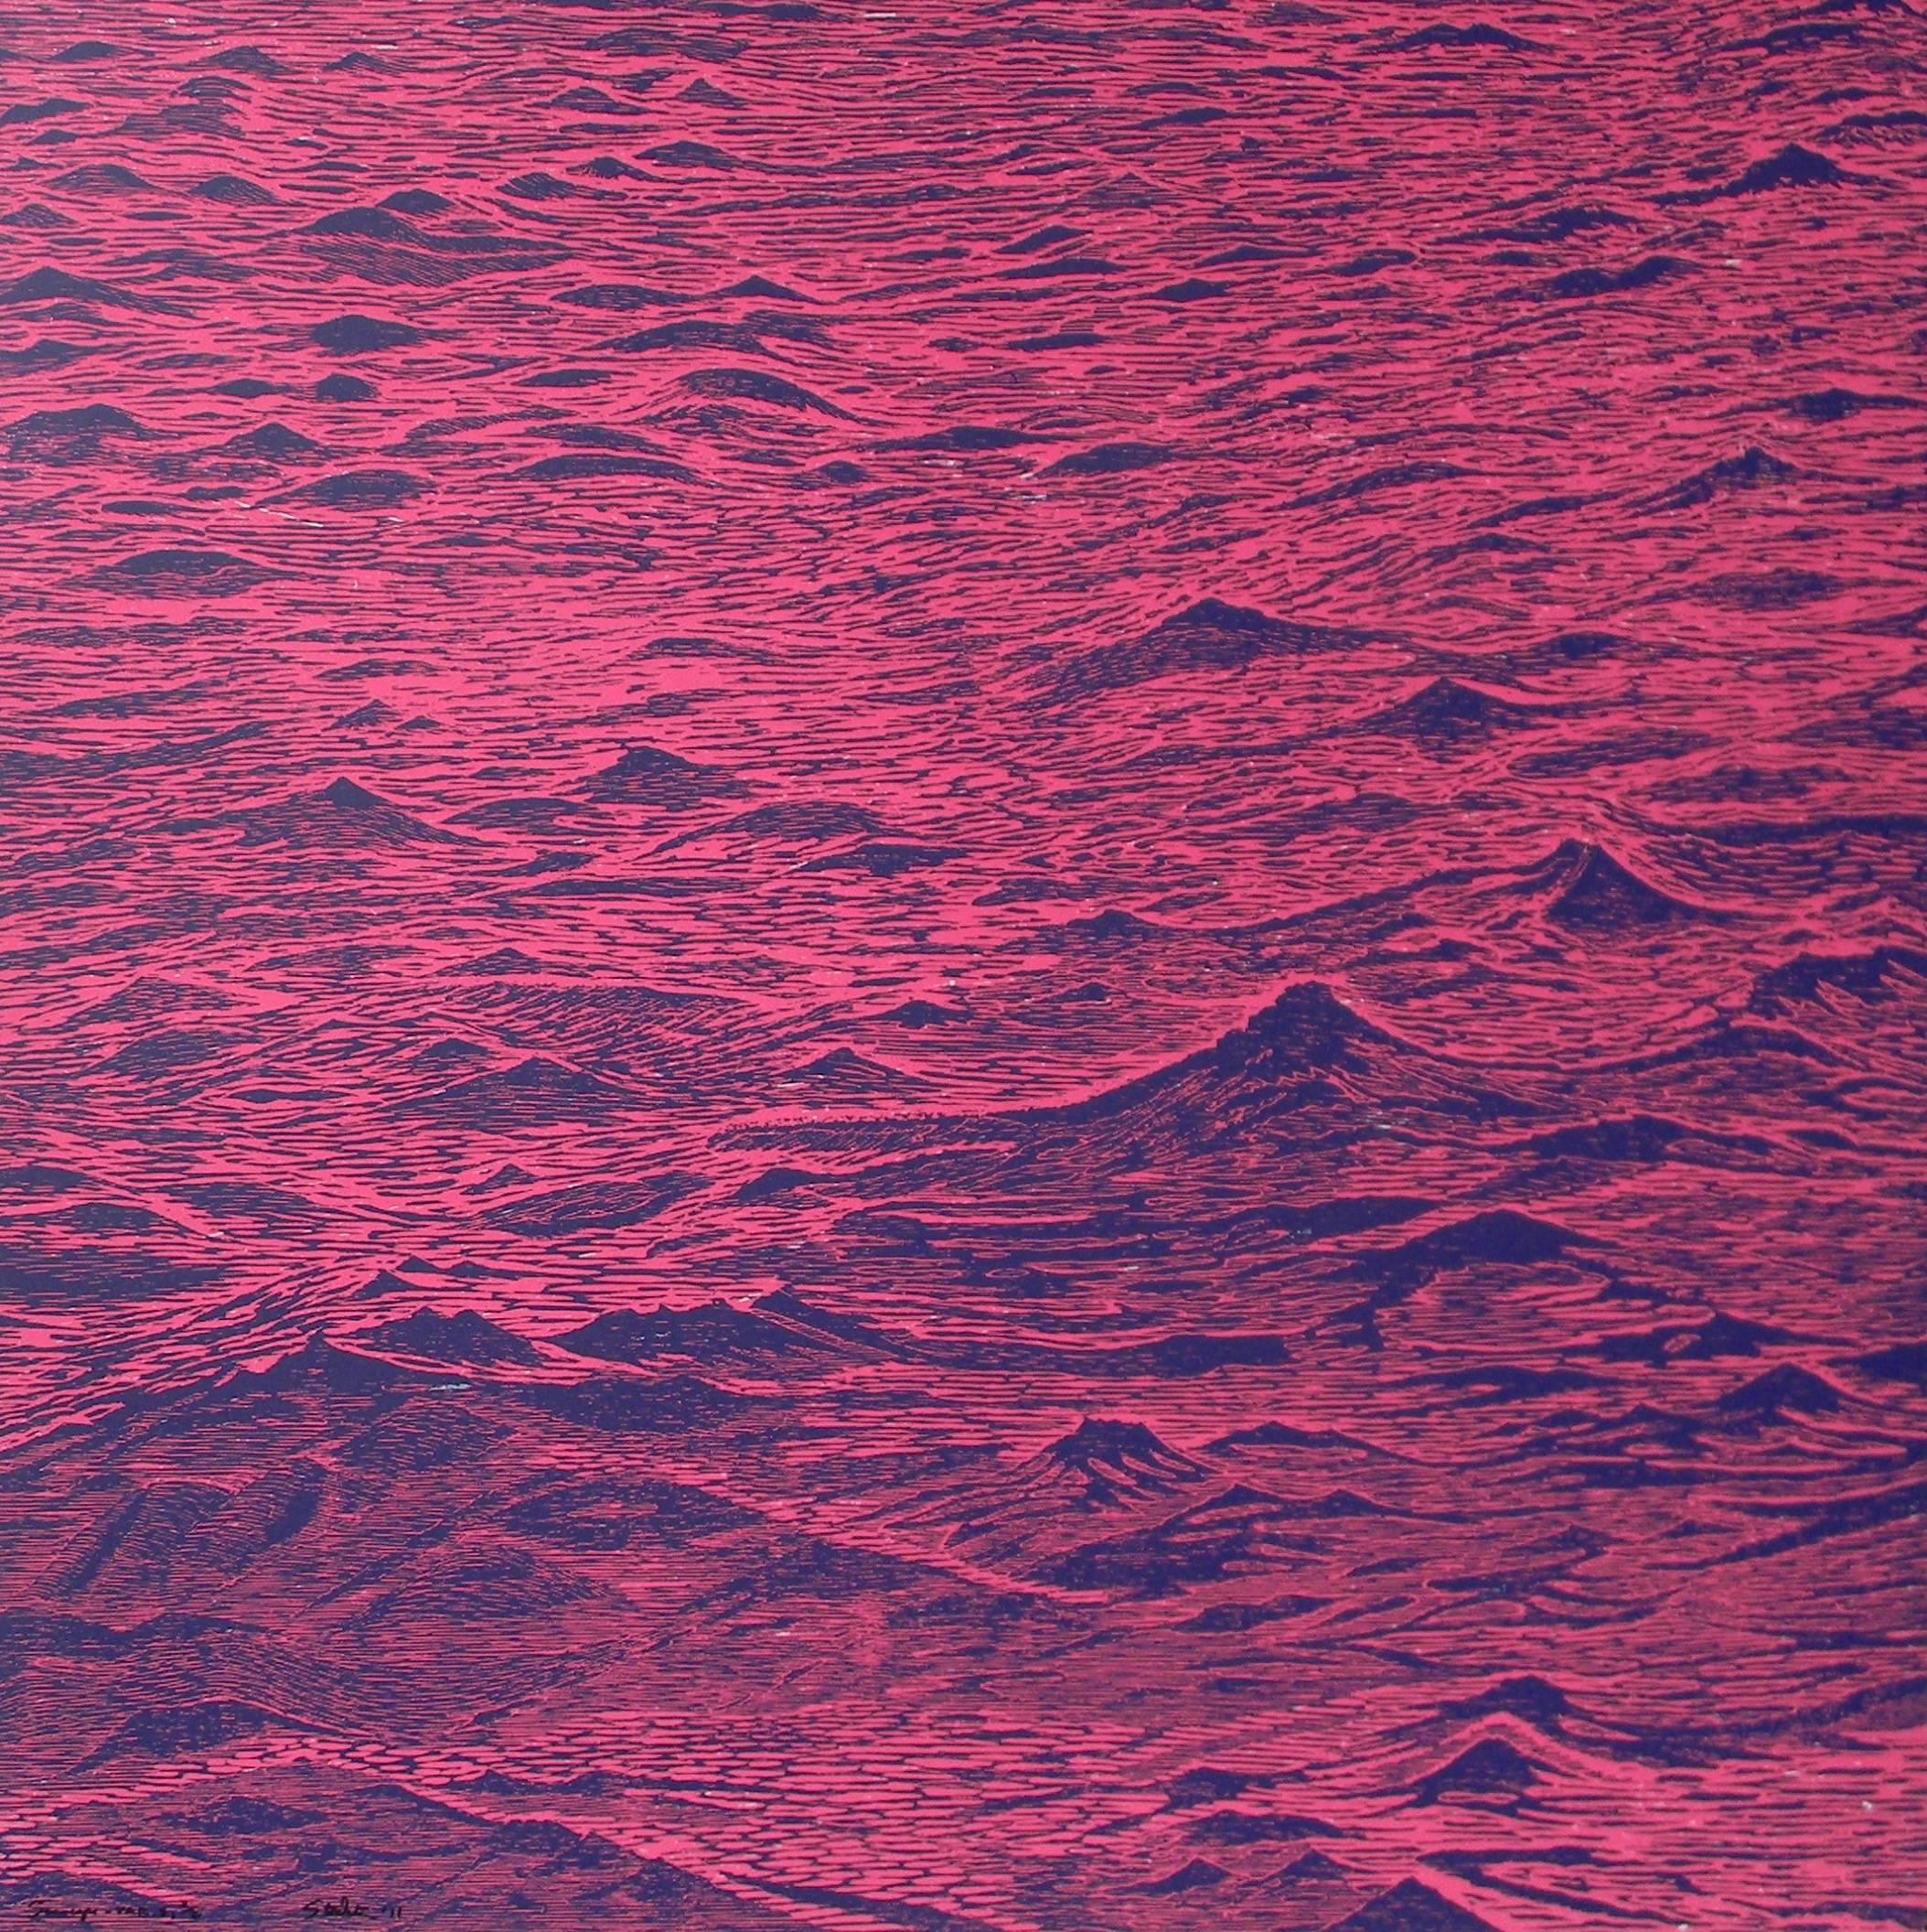 Seascape Five, Ocean Waves Woodcut Print in Bright Pink and Dark Cobalt Blue